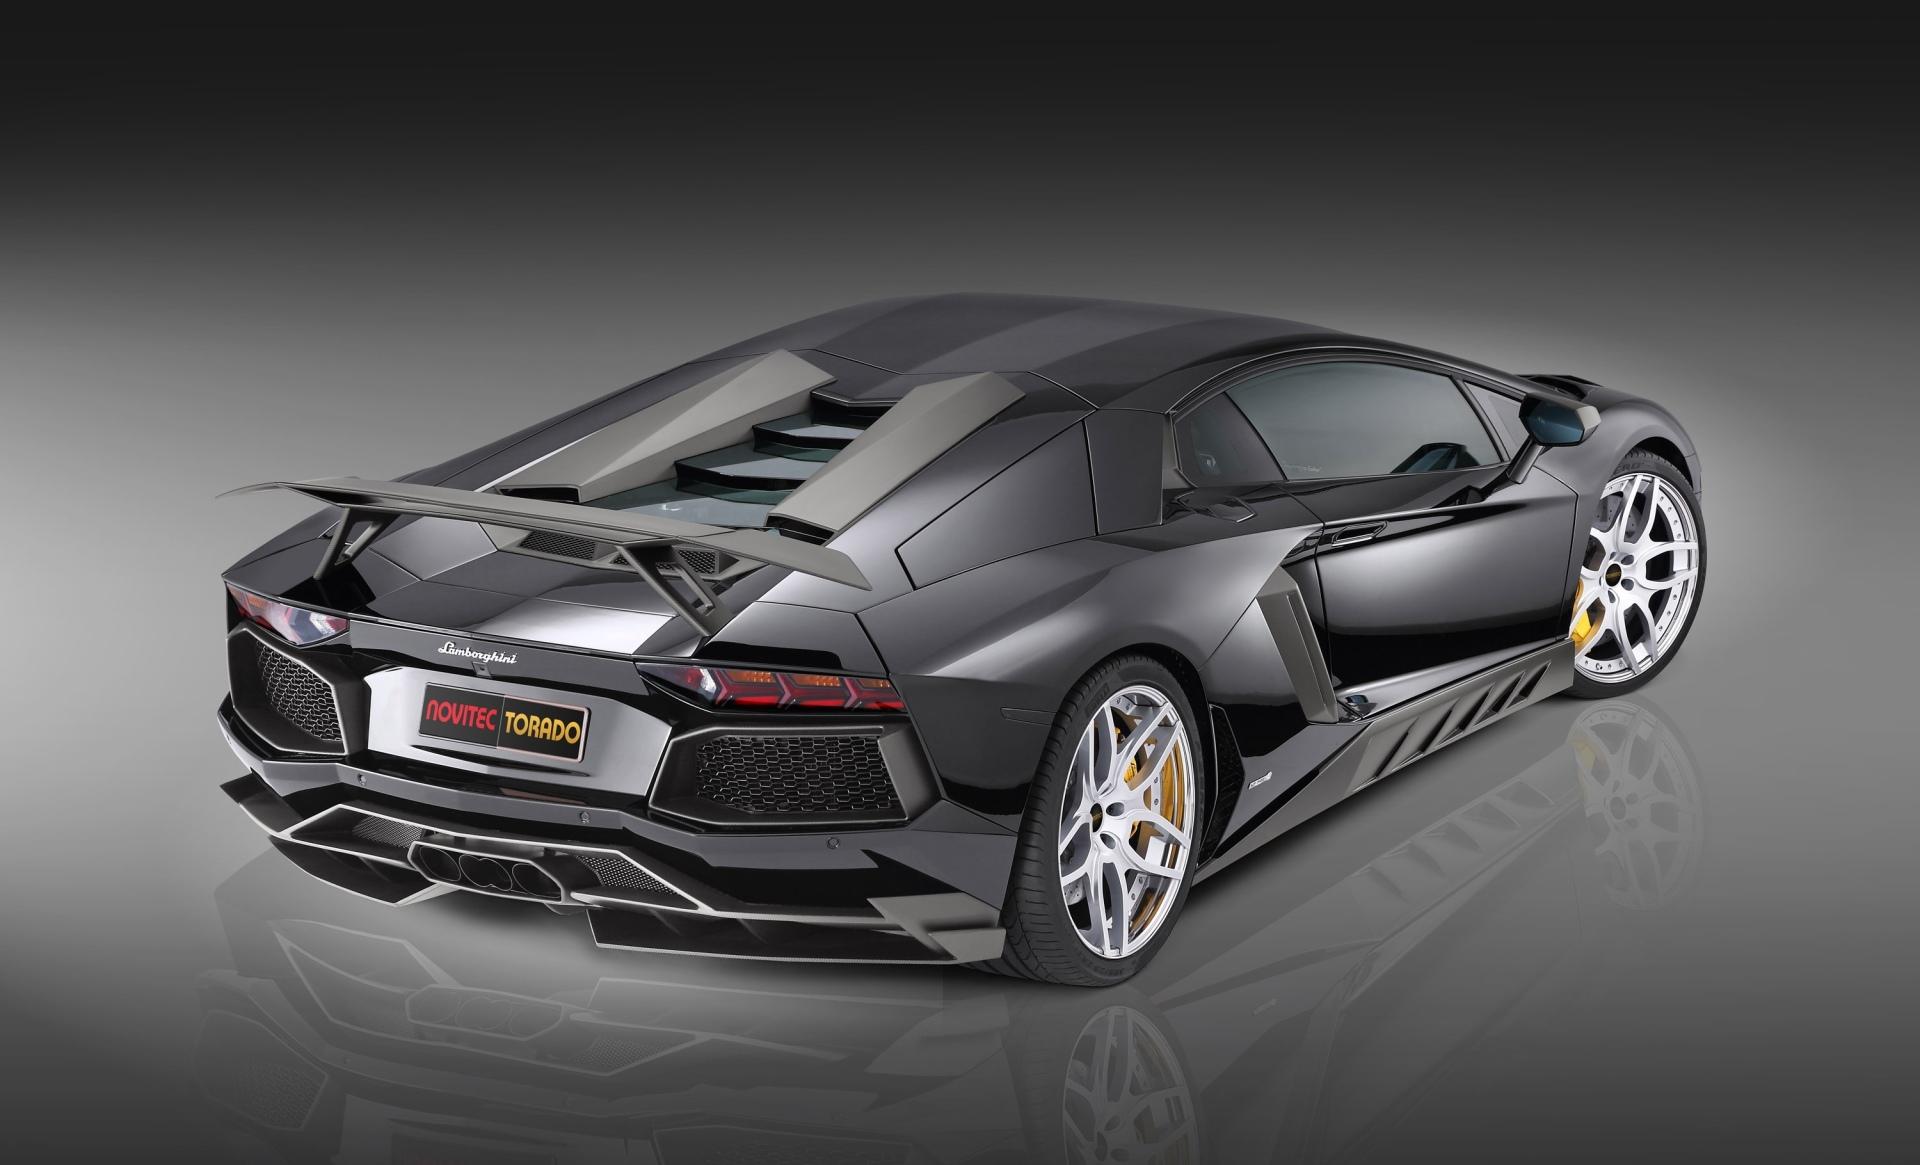 Lamborghini Novitec Torado at 1600 x 1200 size wallpapers HD quality